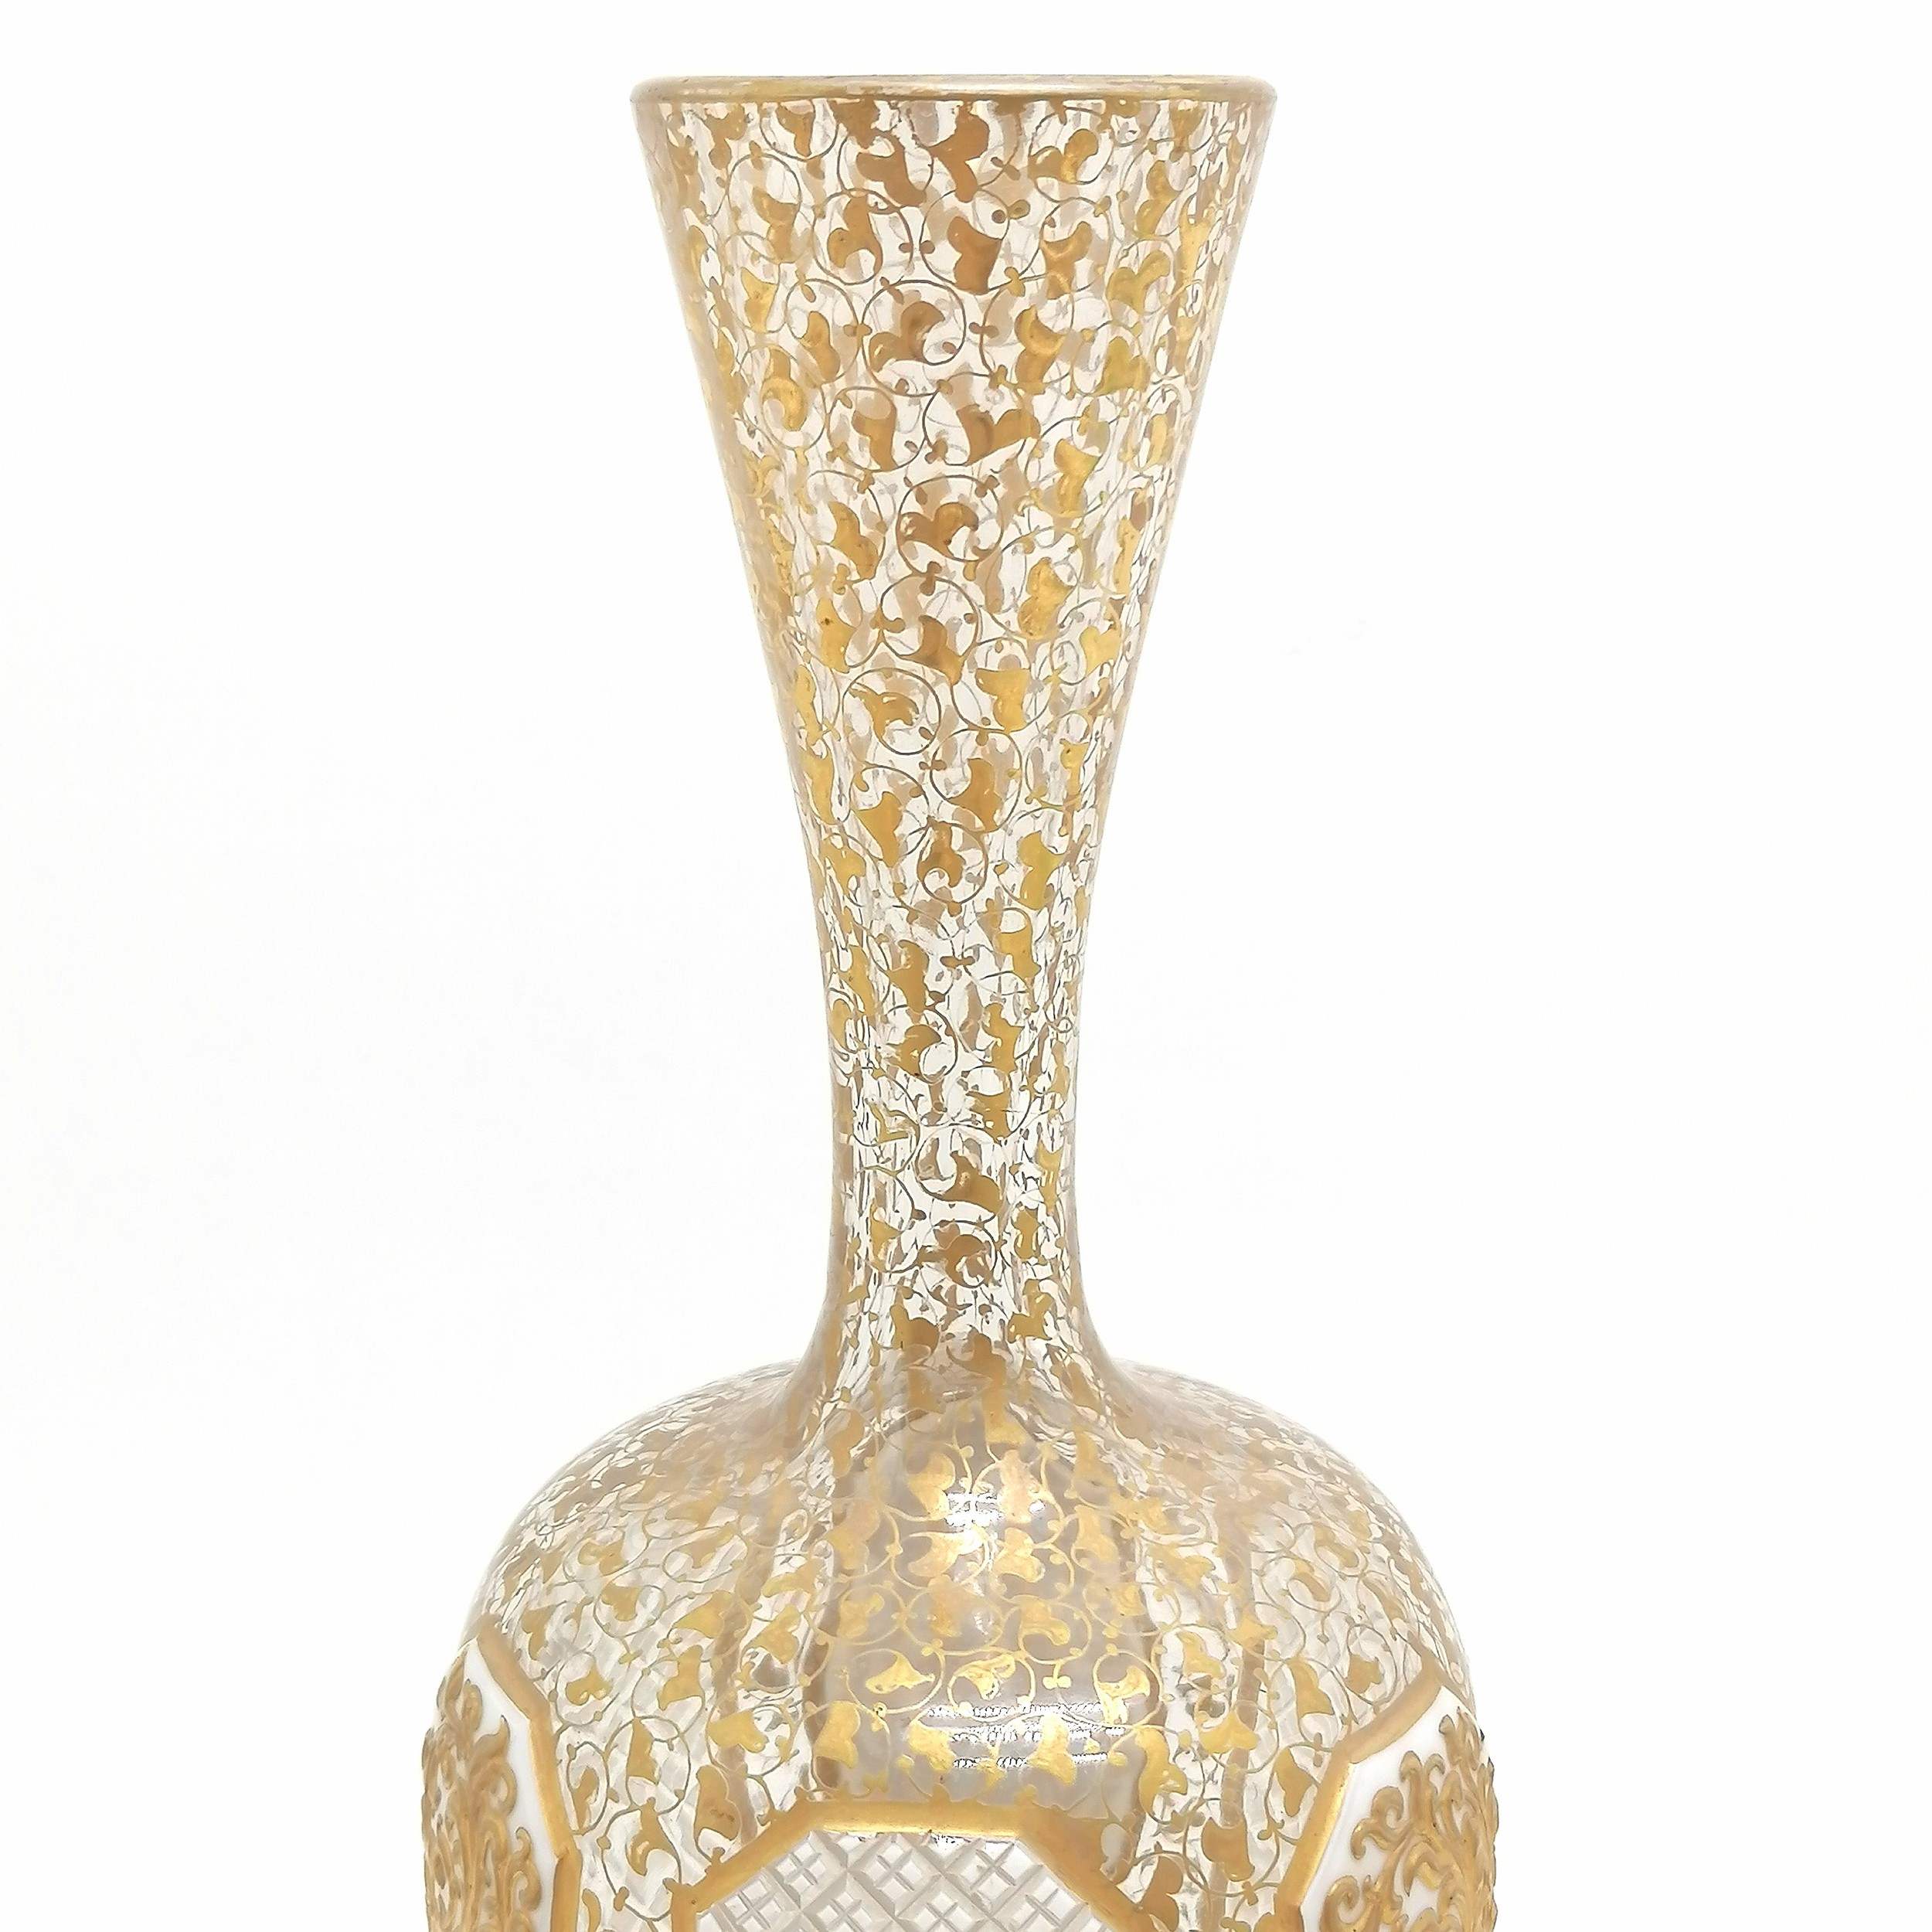 Antique Bohemian overlaid glass vase with profuse gilt decoration & decorative panels - 36cm - Image 3 of 5